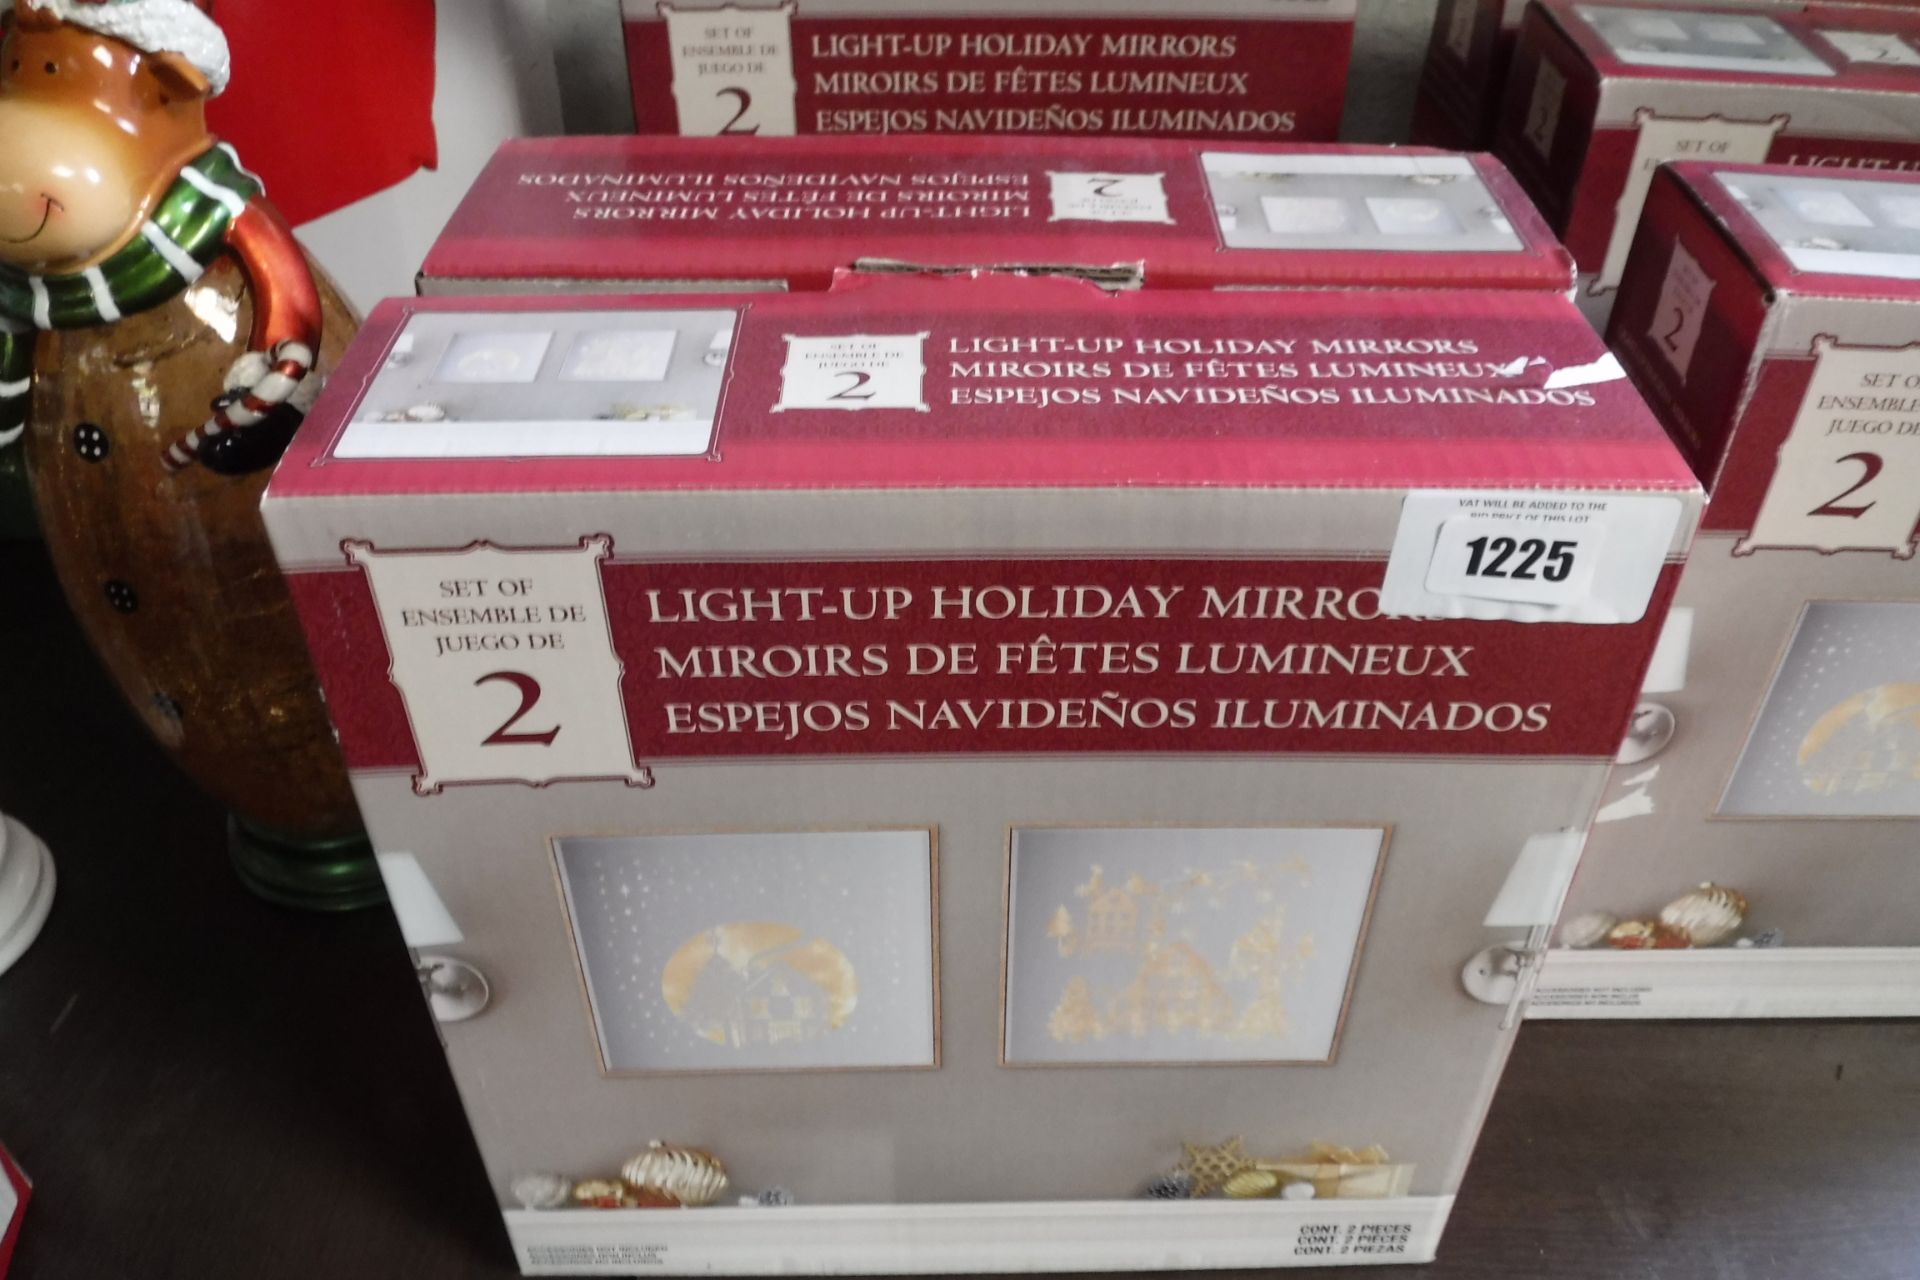 2 box sets of light up holiday Christmas mirrors